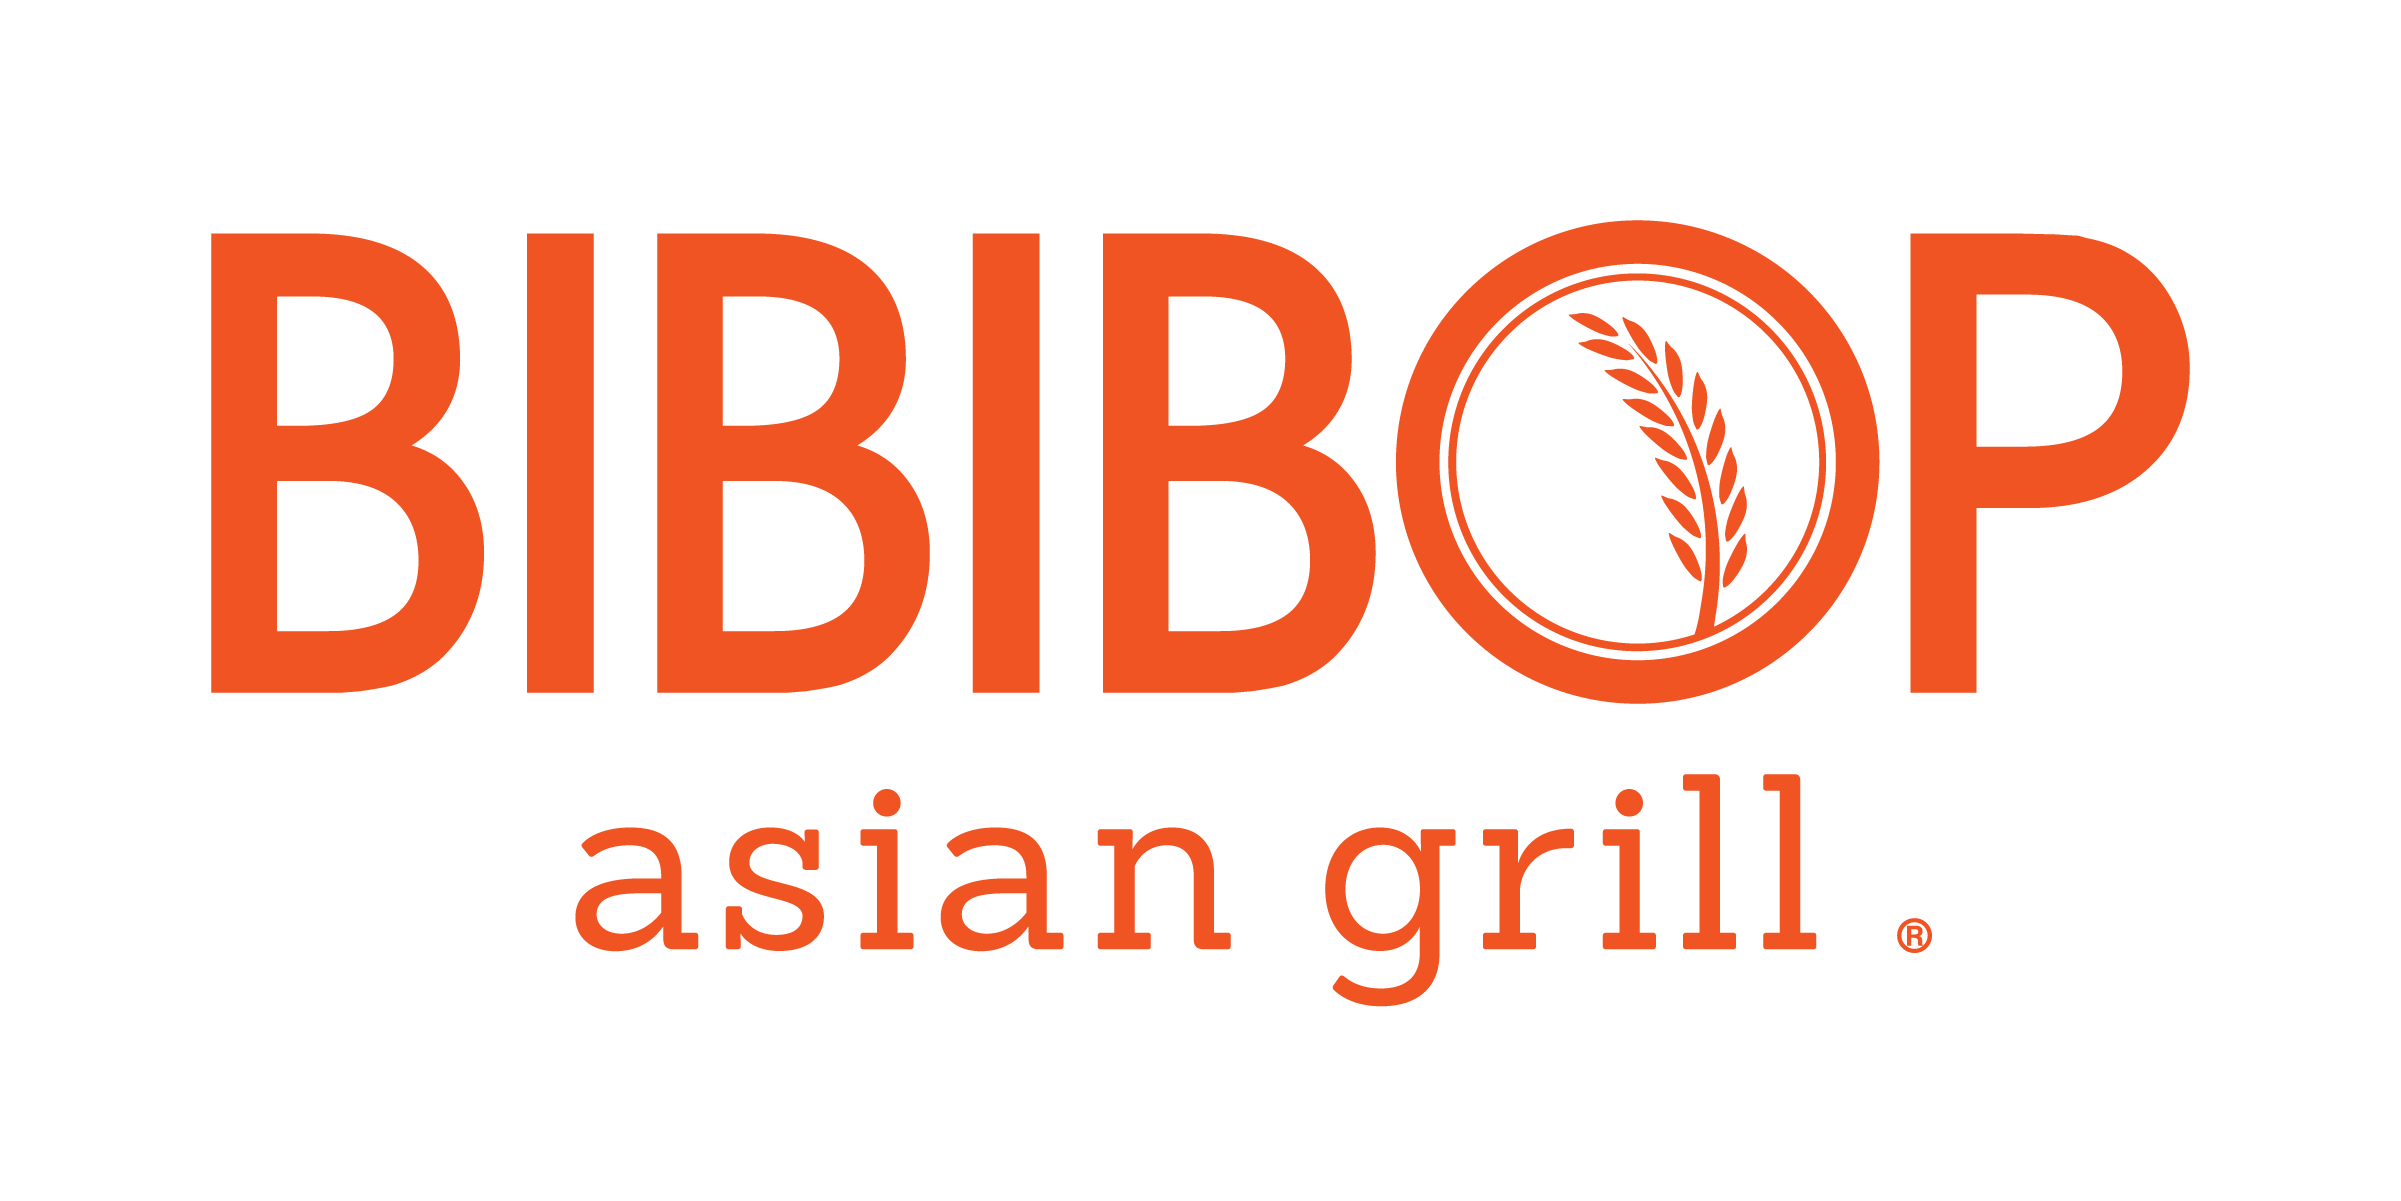 Bibibop Asian Grill Logo